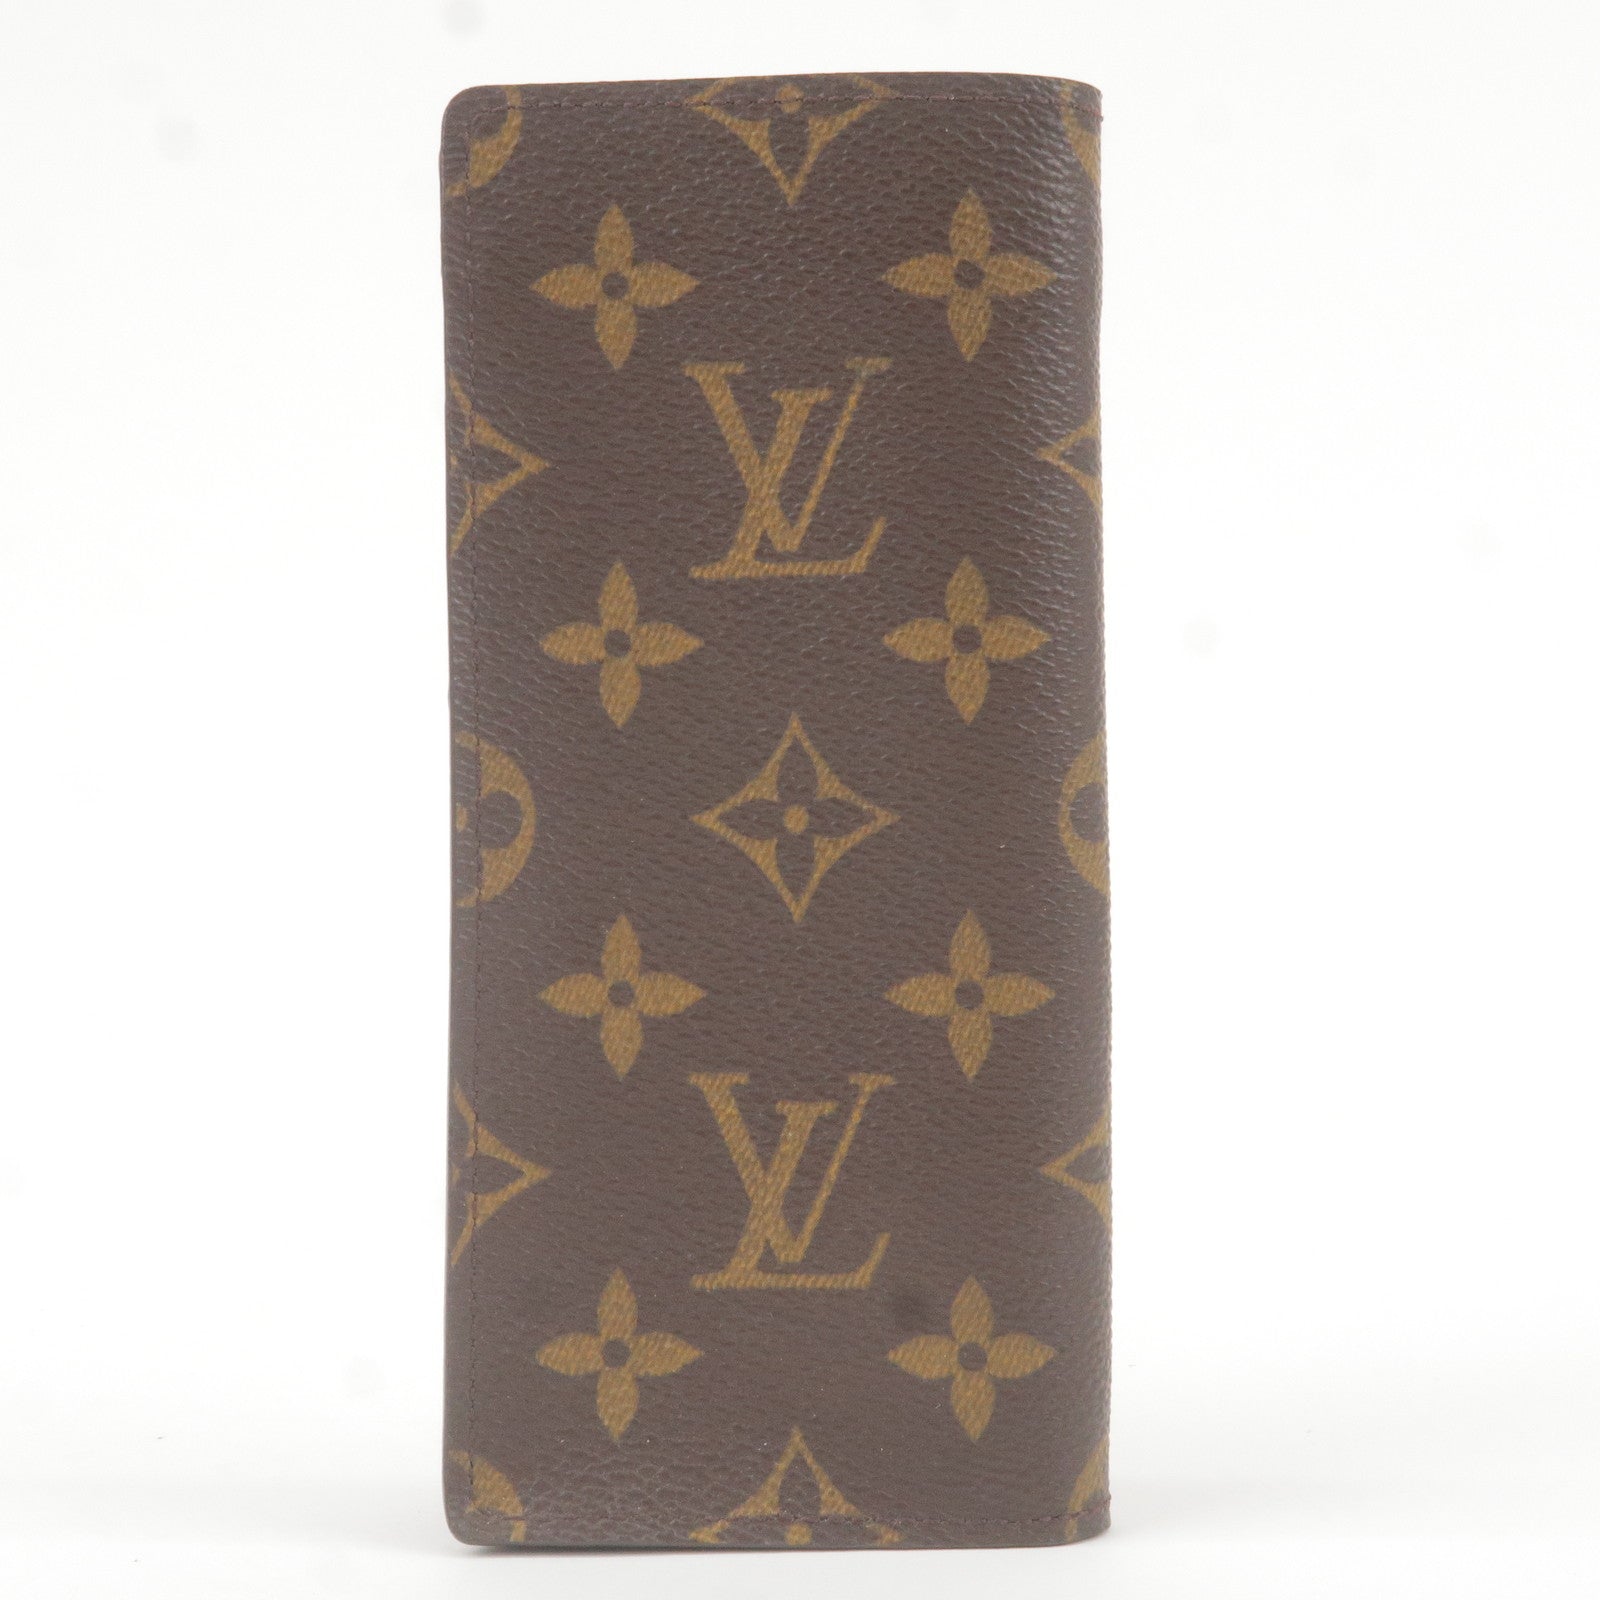 Louis Vuitton Coin Card Holder Black autres Toiles Monogram